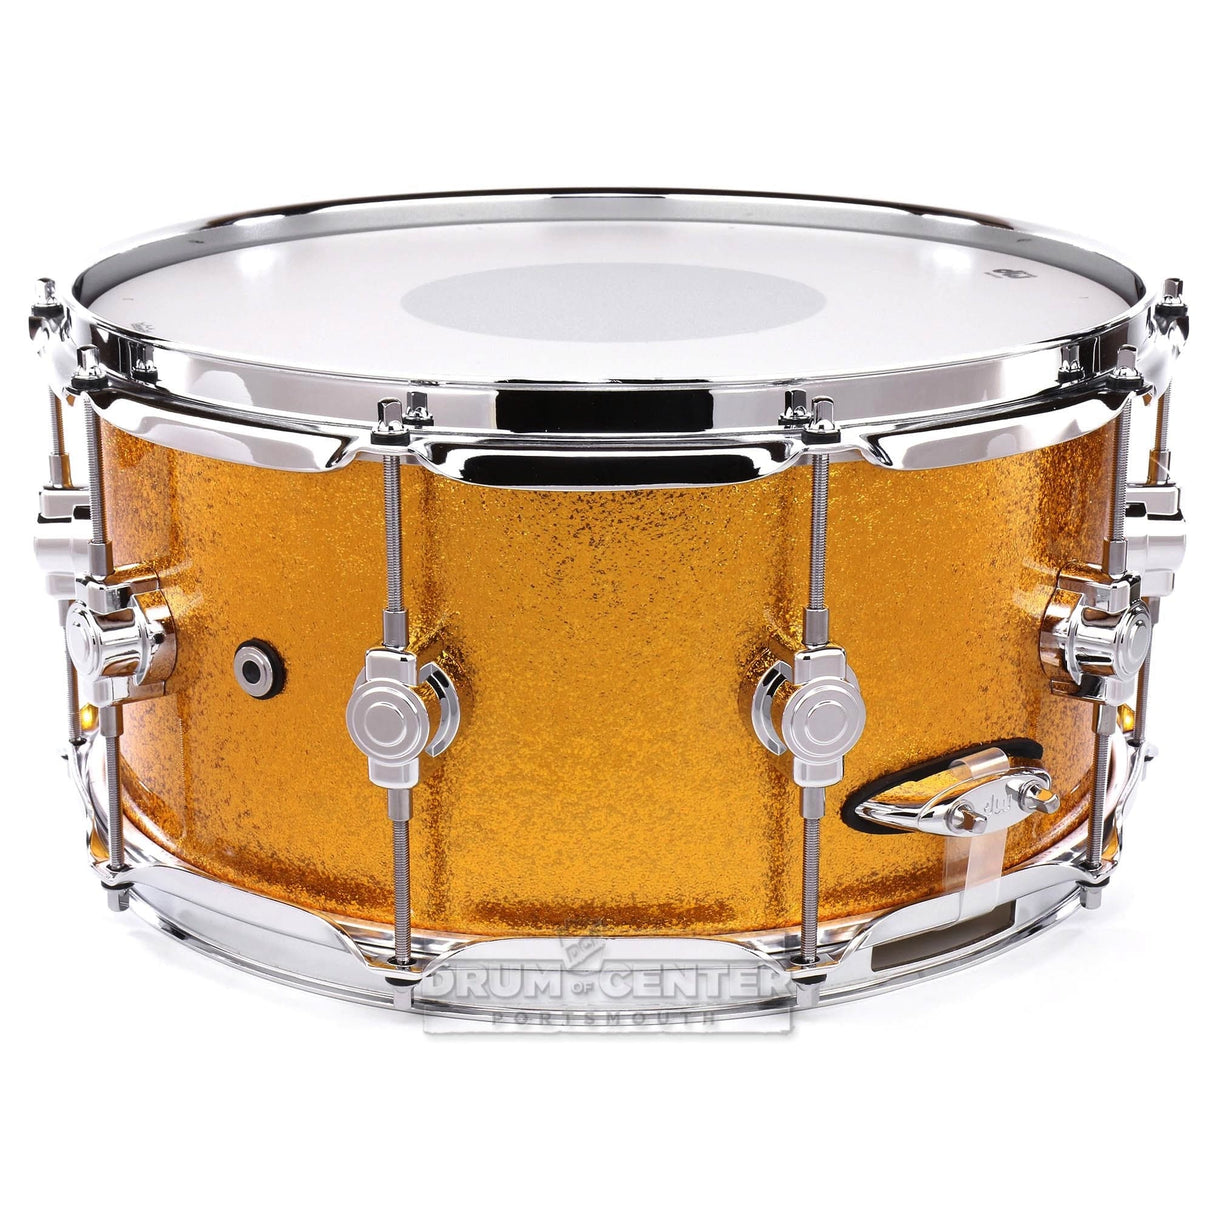 DW Performance Snare Drum 14x6.5 Gold Sparkle